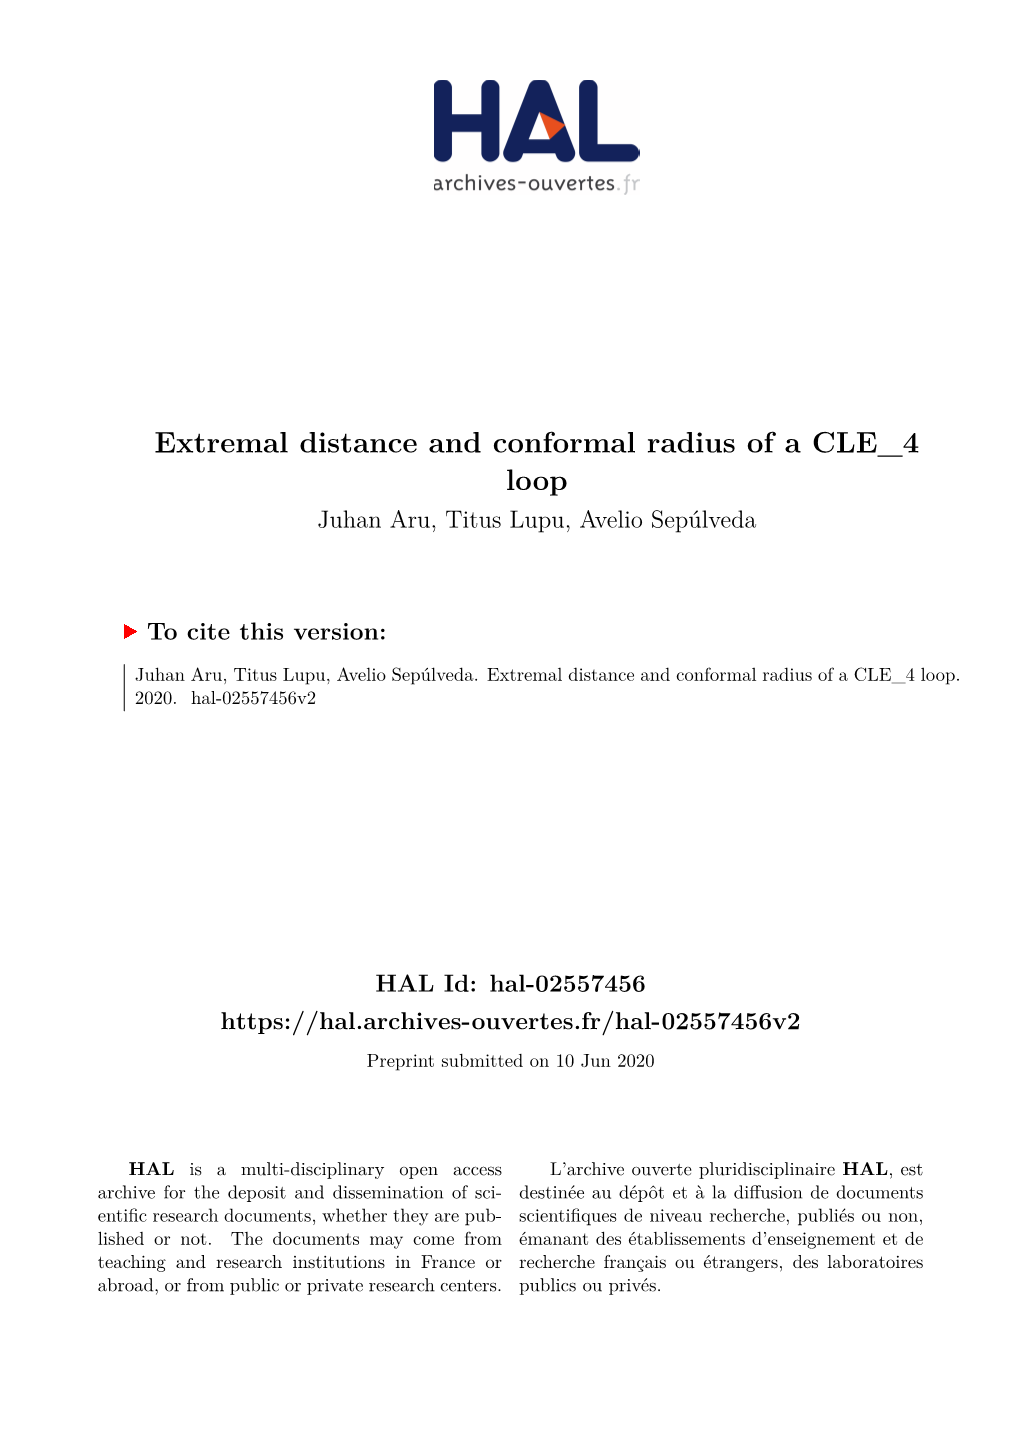 Extremal Distance and Conformal Radius of a CLE 4 Loop Juhan Aru, Titus Lupu, Avelio Sepúlveda